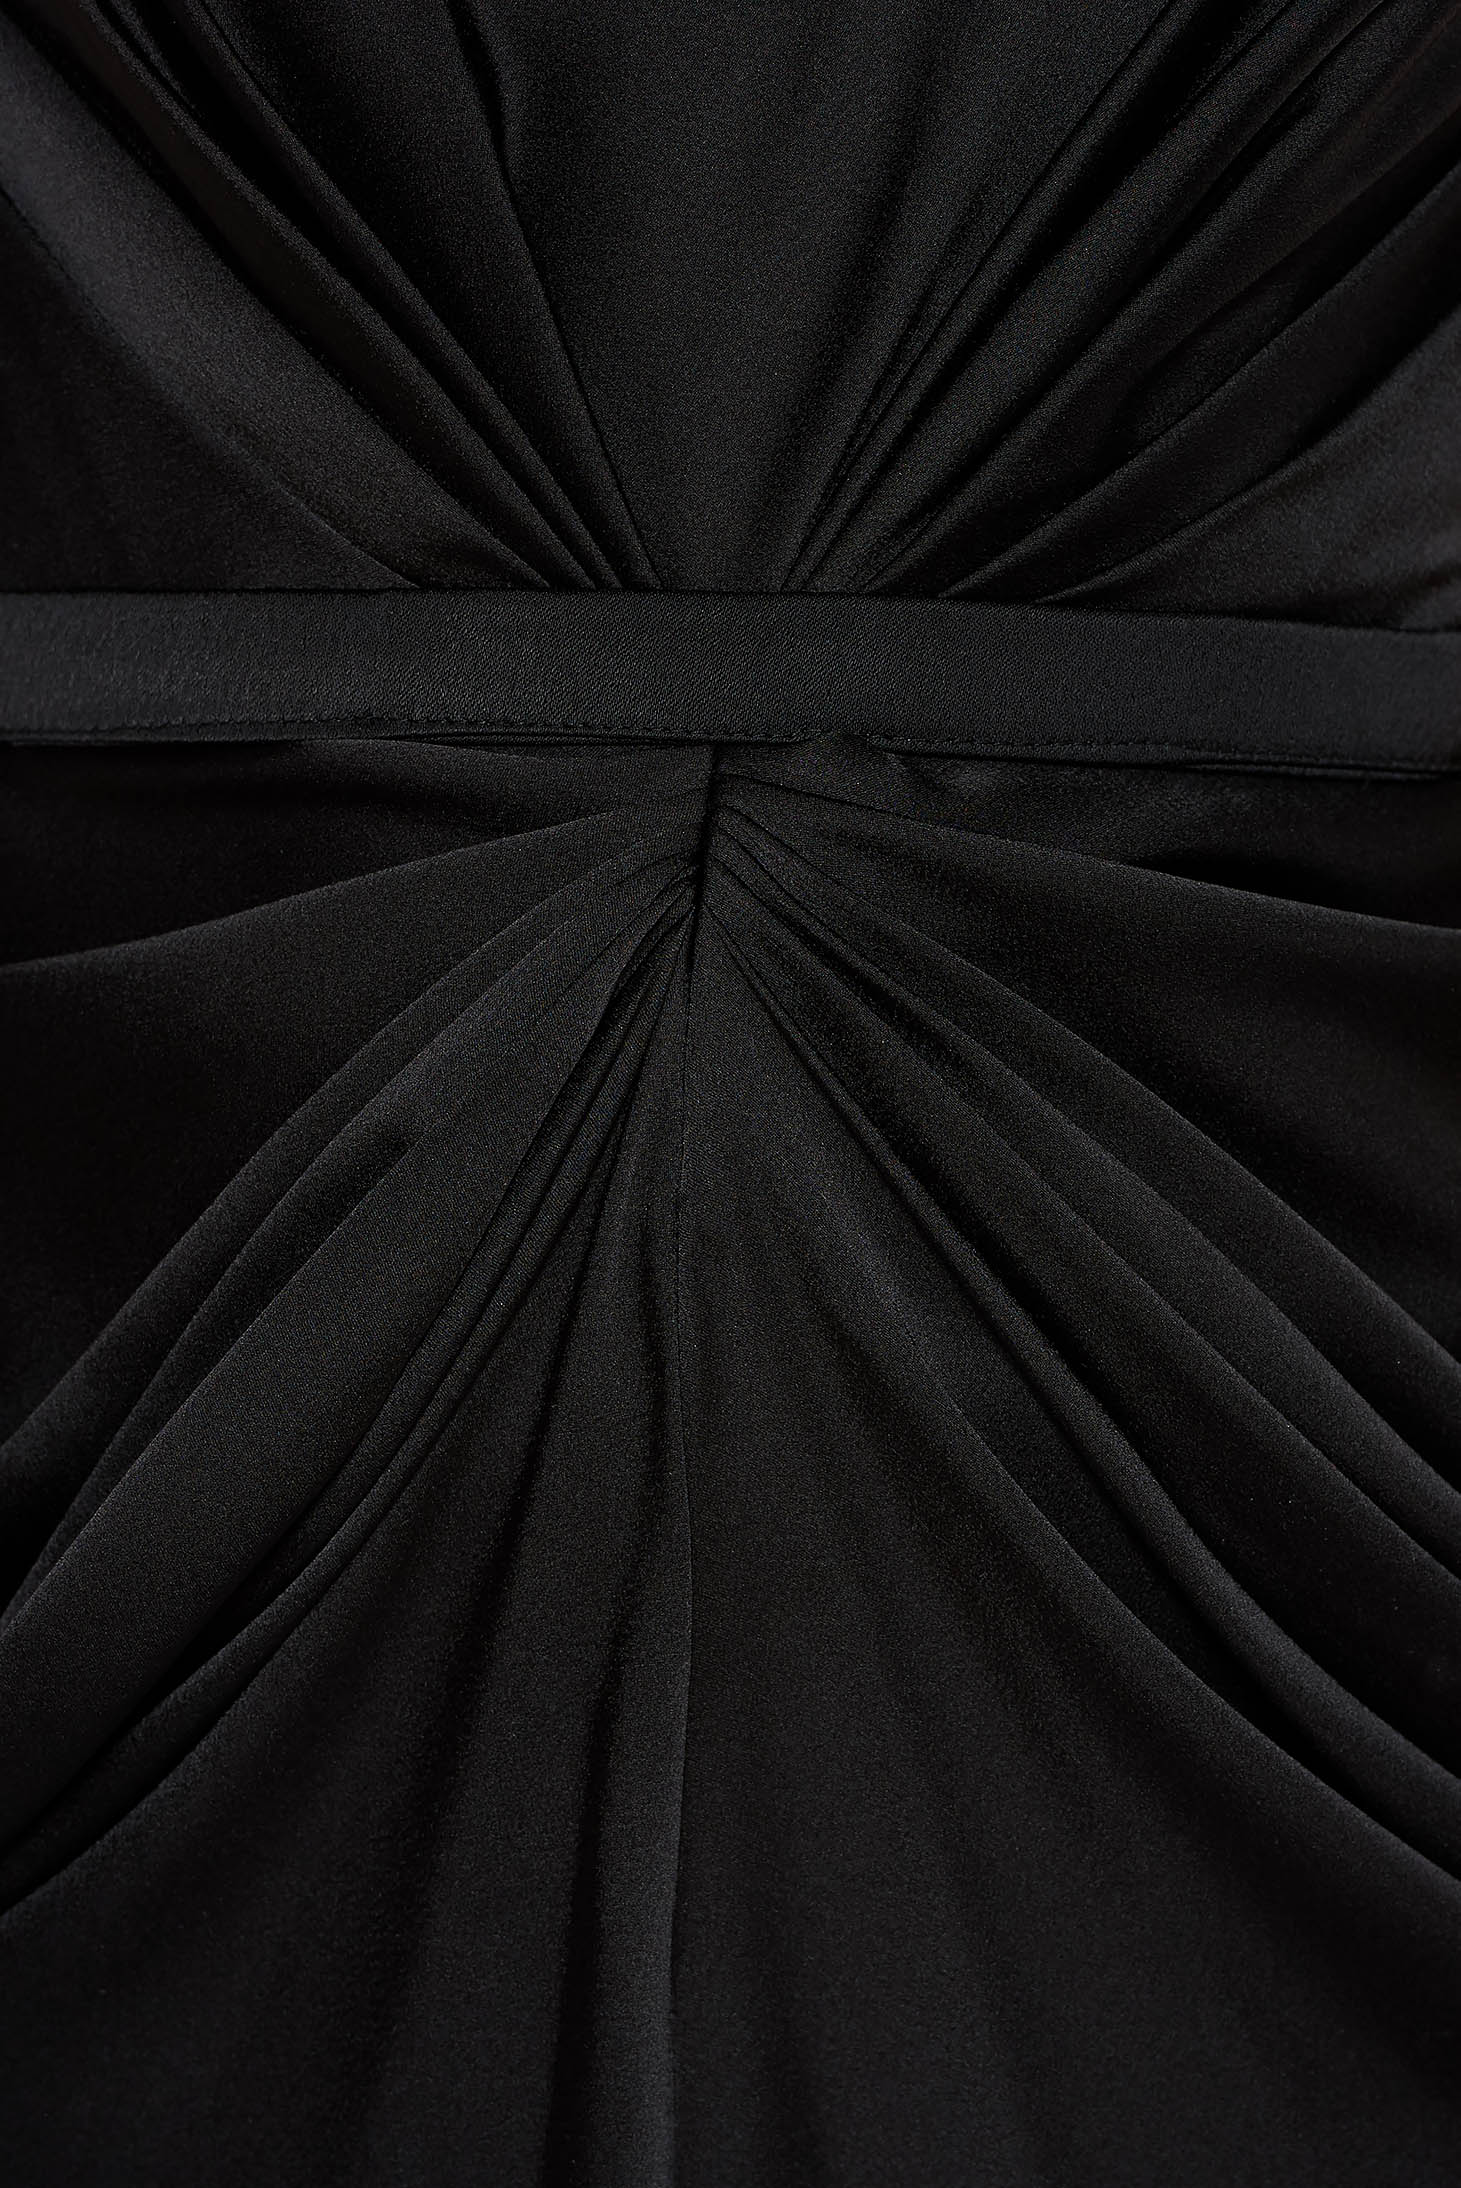 Occasional Ana Radu black pencil with satin fabric texture dress